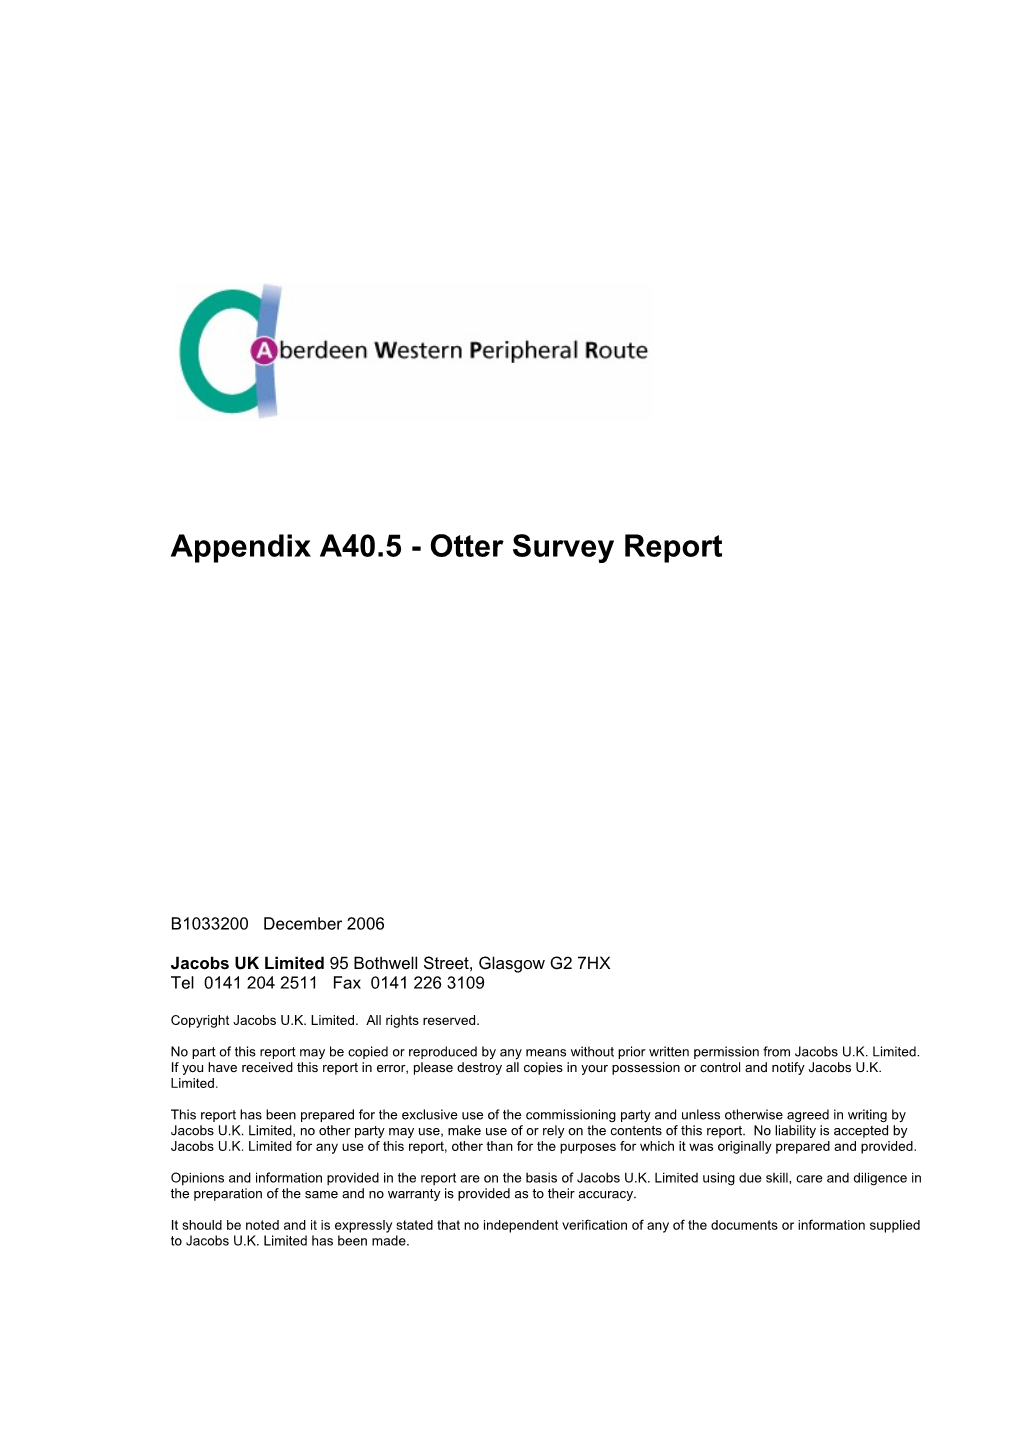 Otter Survey Report